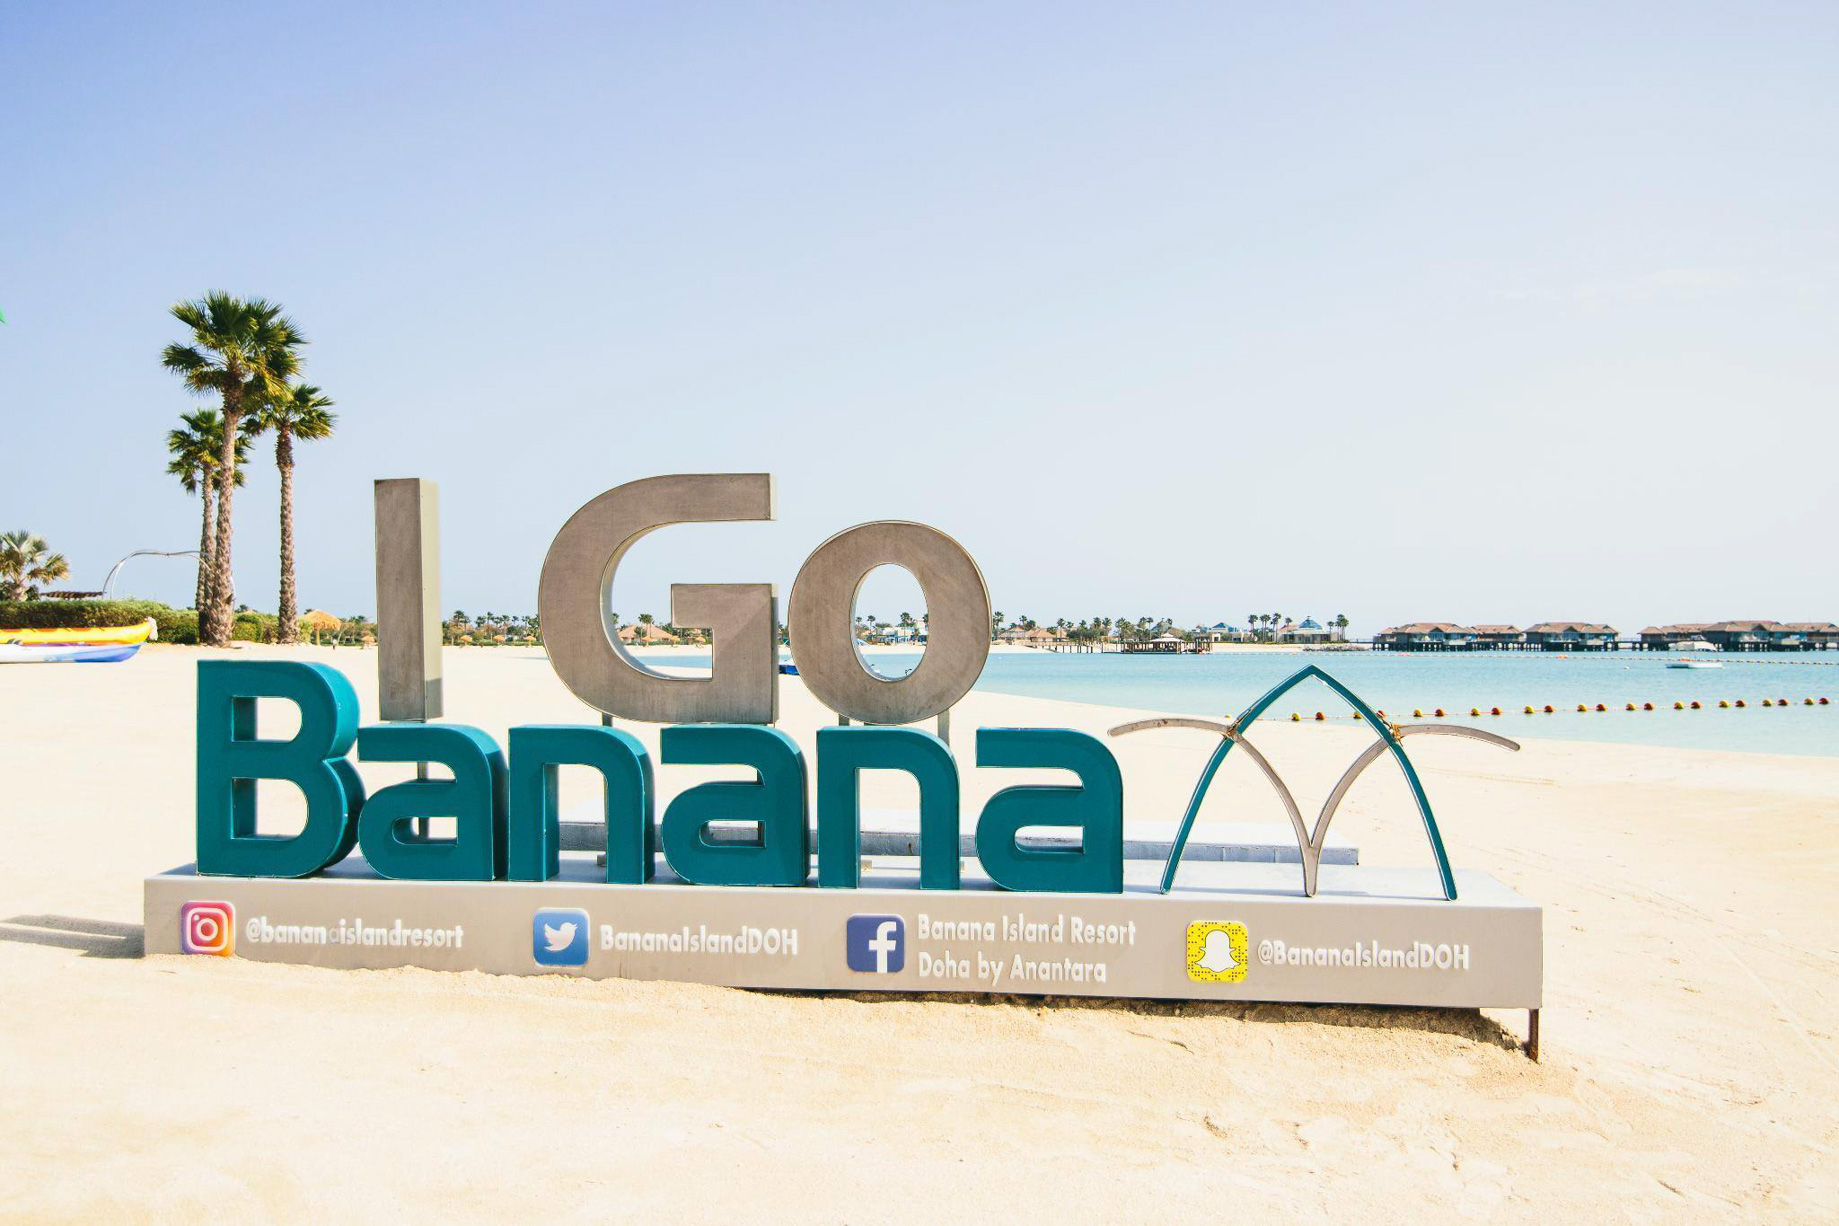 Banana Island Resort Doha by Anantara – Qatar – I Go Banana Sign